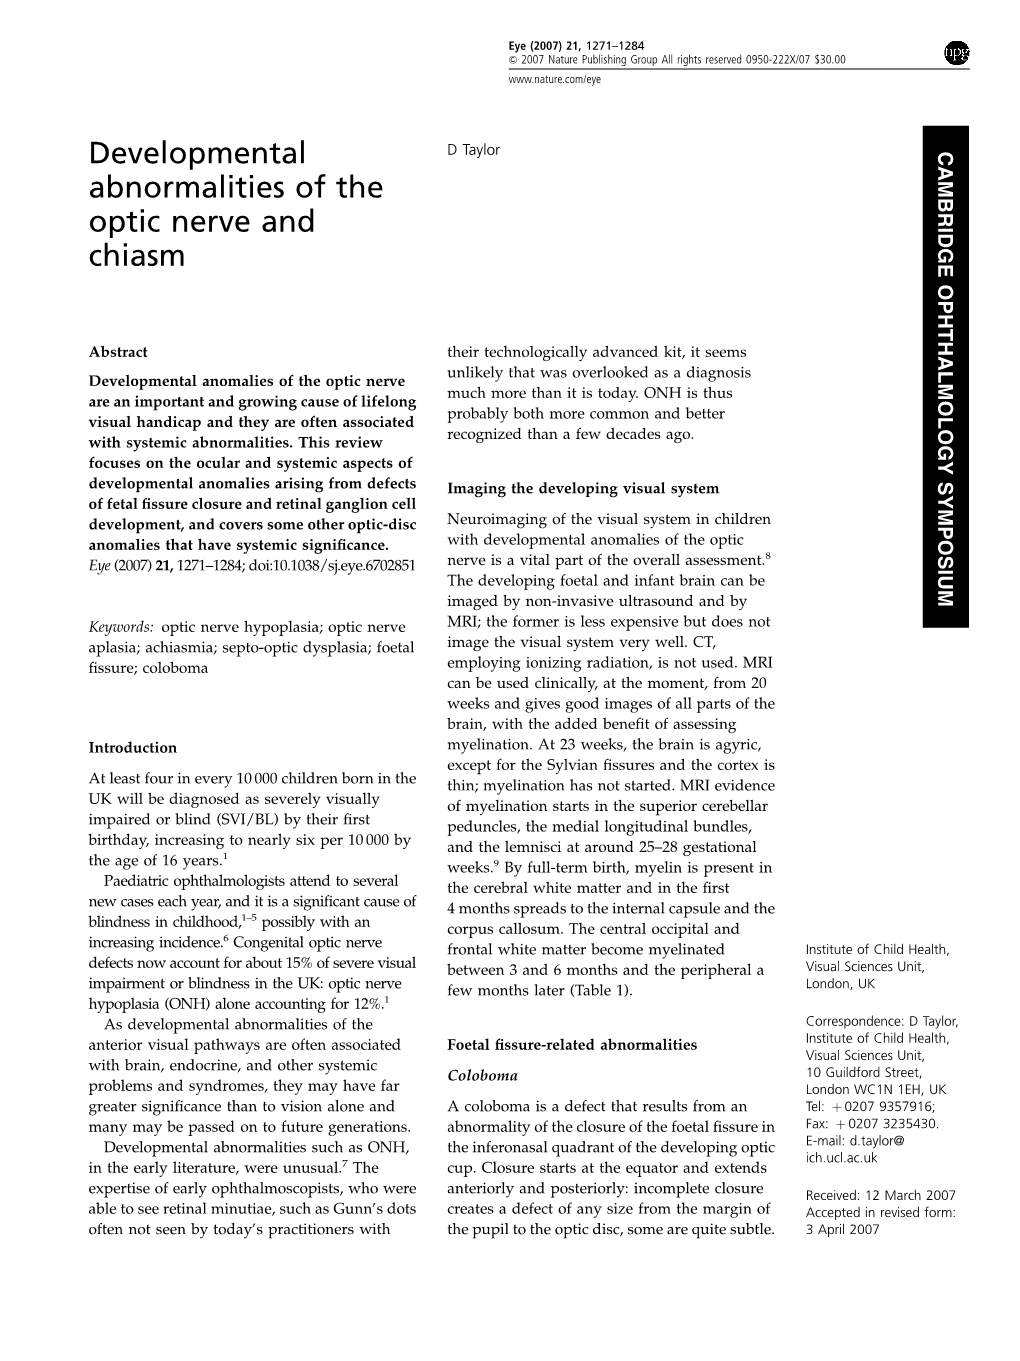 Developmental Abnormalities of the Optic Nerve and Chiasm